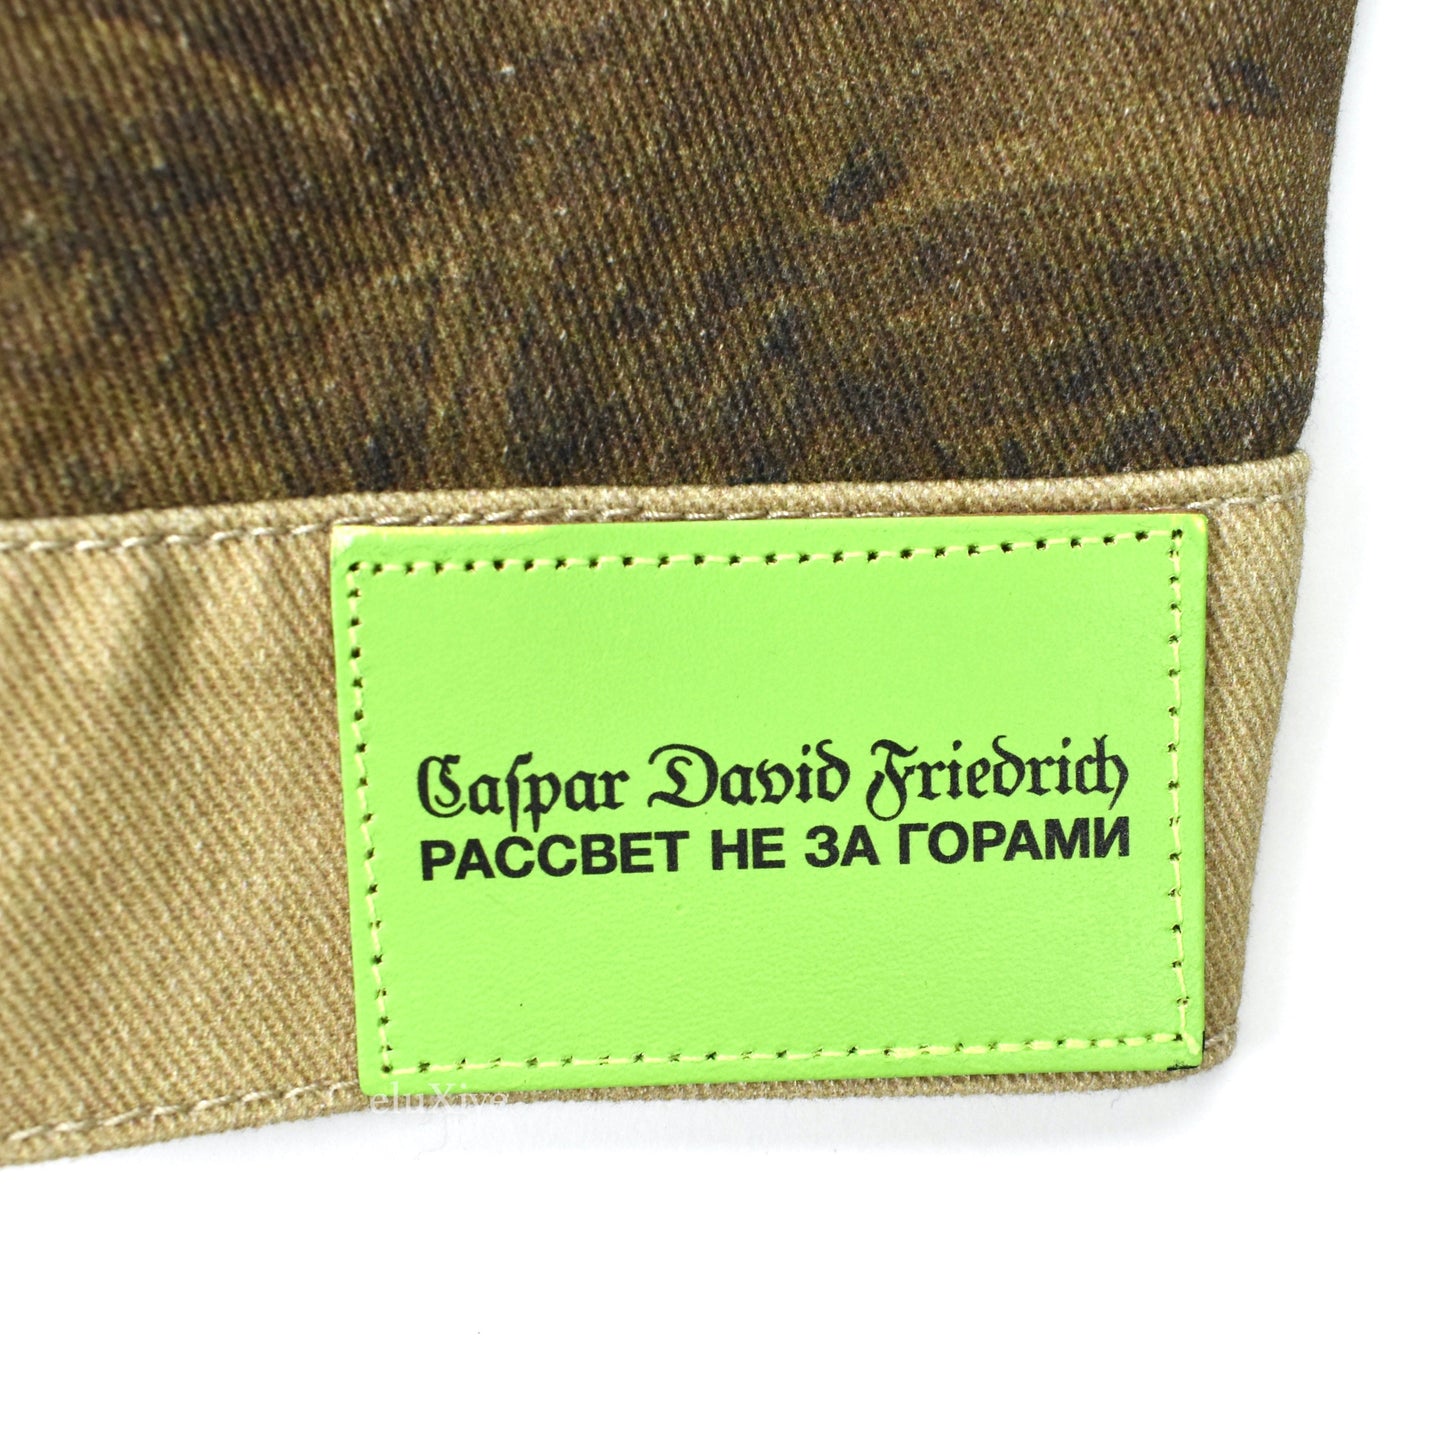 Paccbet - Caspar David Freidrich Painting Print Trucker Jacket